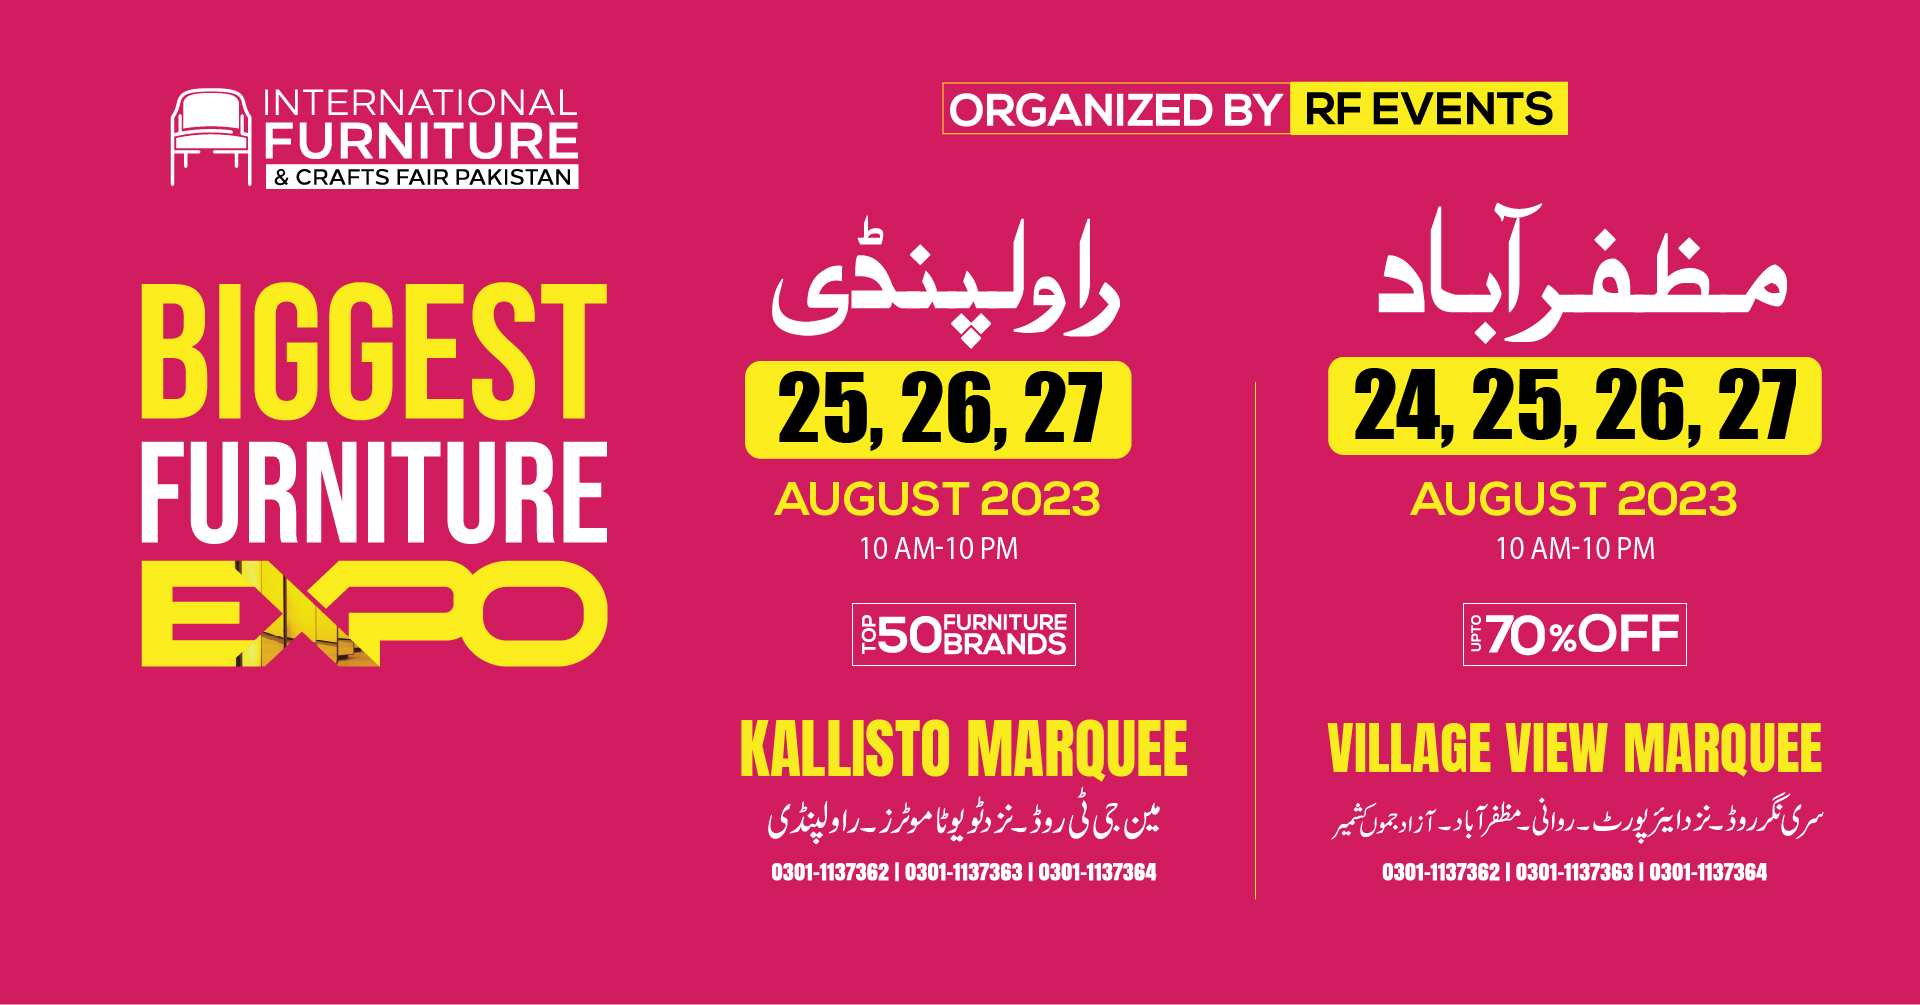 Rawalpindi International Furniture and Crafts Fair 25,26,27 August 2023 at Kaliisto Marquee G.T Road, Rawalpindi, Punjab, Pakistan